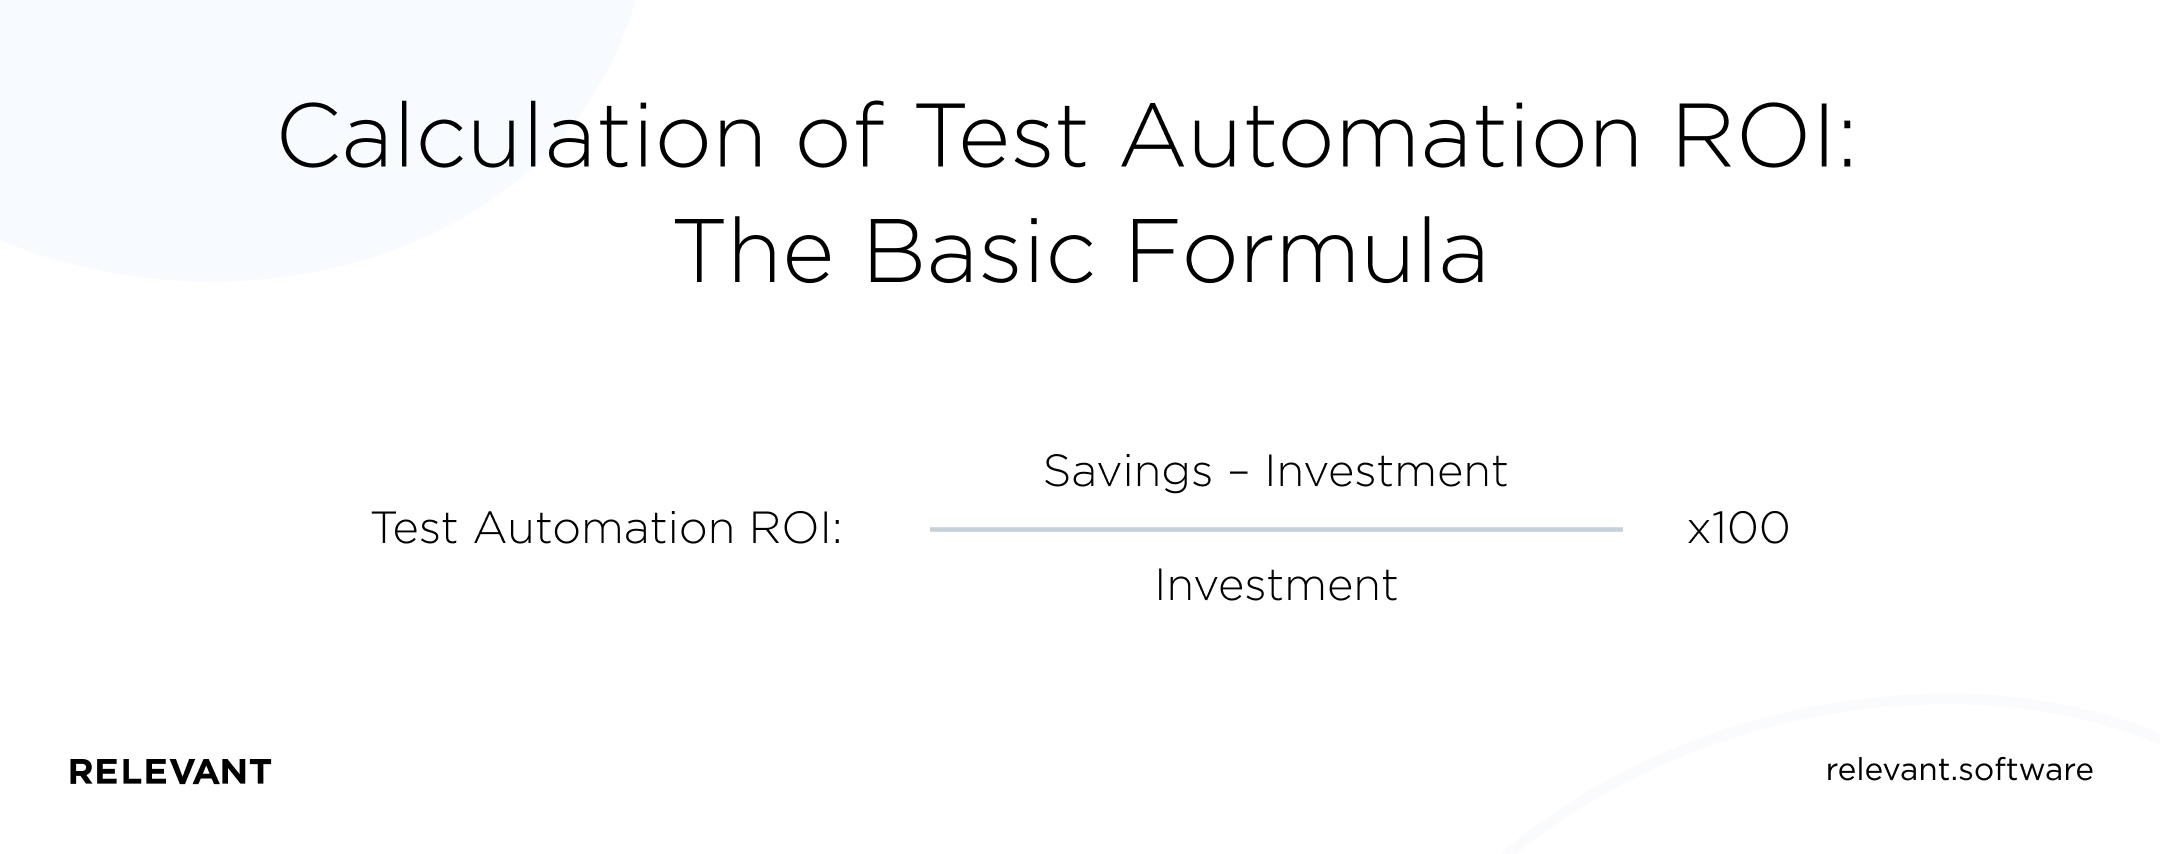 Calculation of Test Automation ROI: The Basic Formula